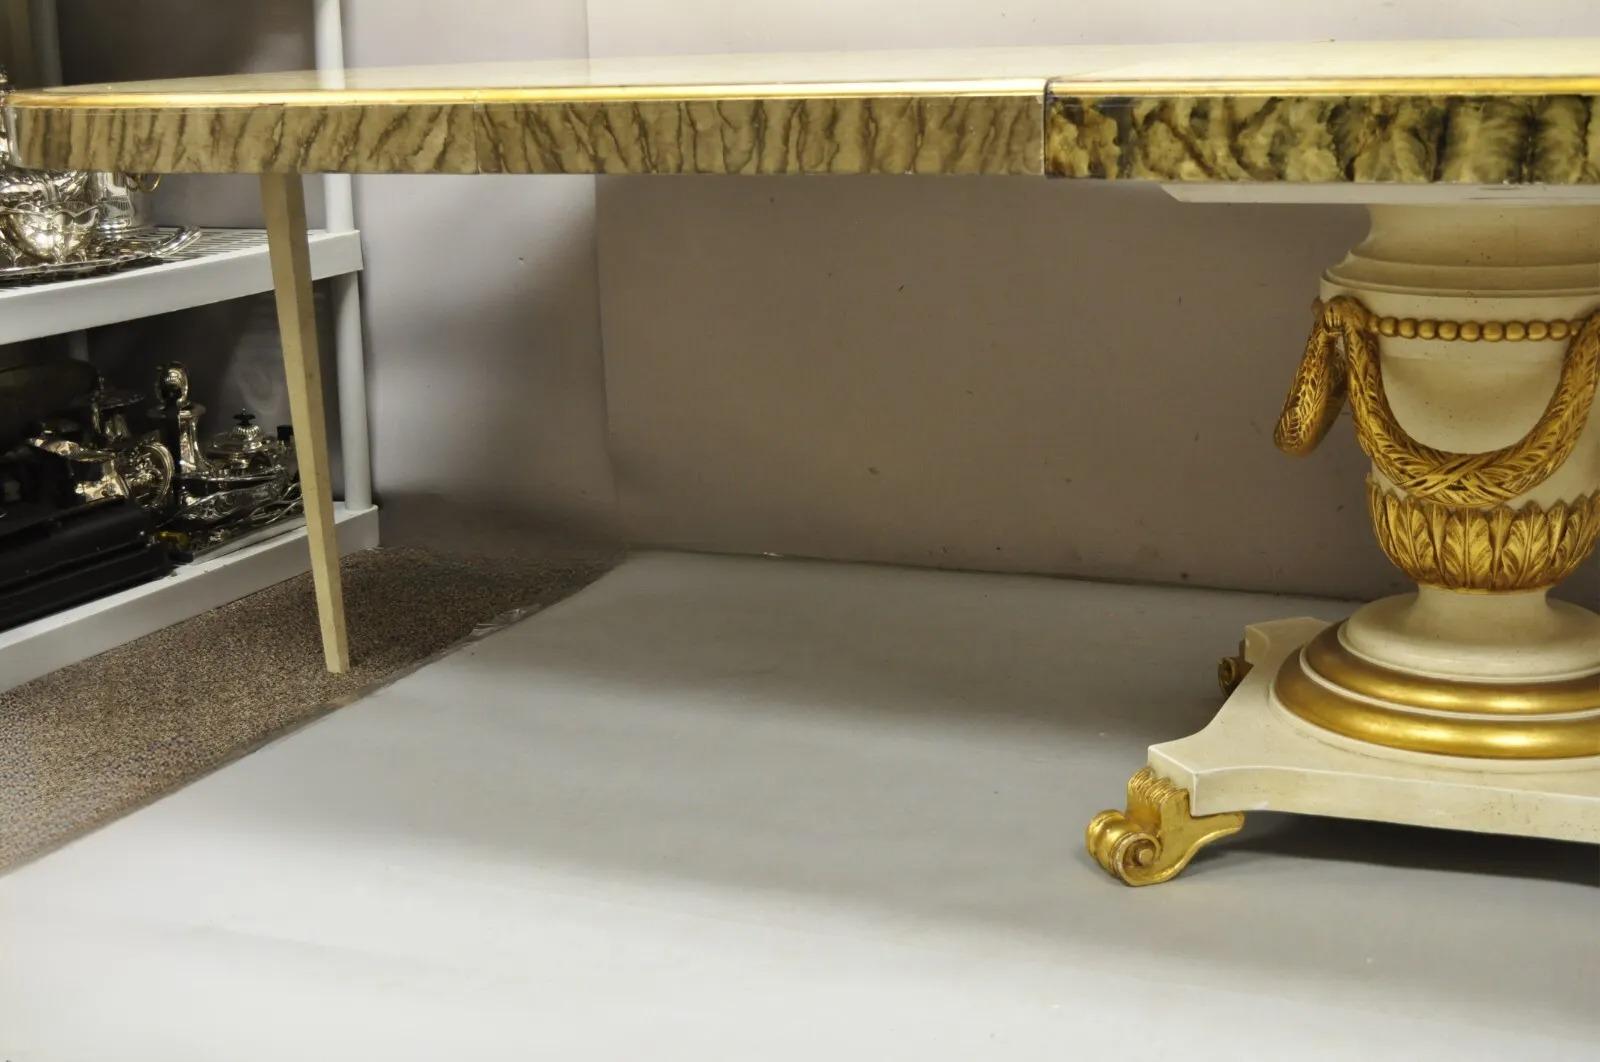 Italian Regency Cream & Gold Gilt Lacquered Urn Pedestal Dining Table - 3 Leaves For Sale 5